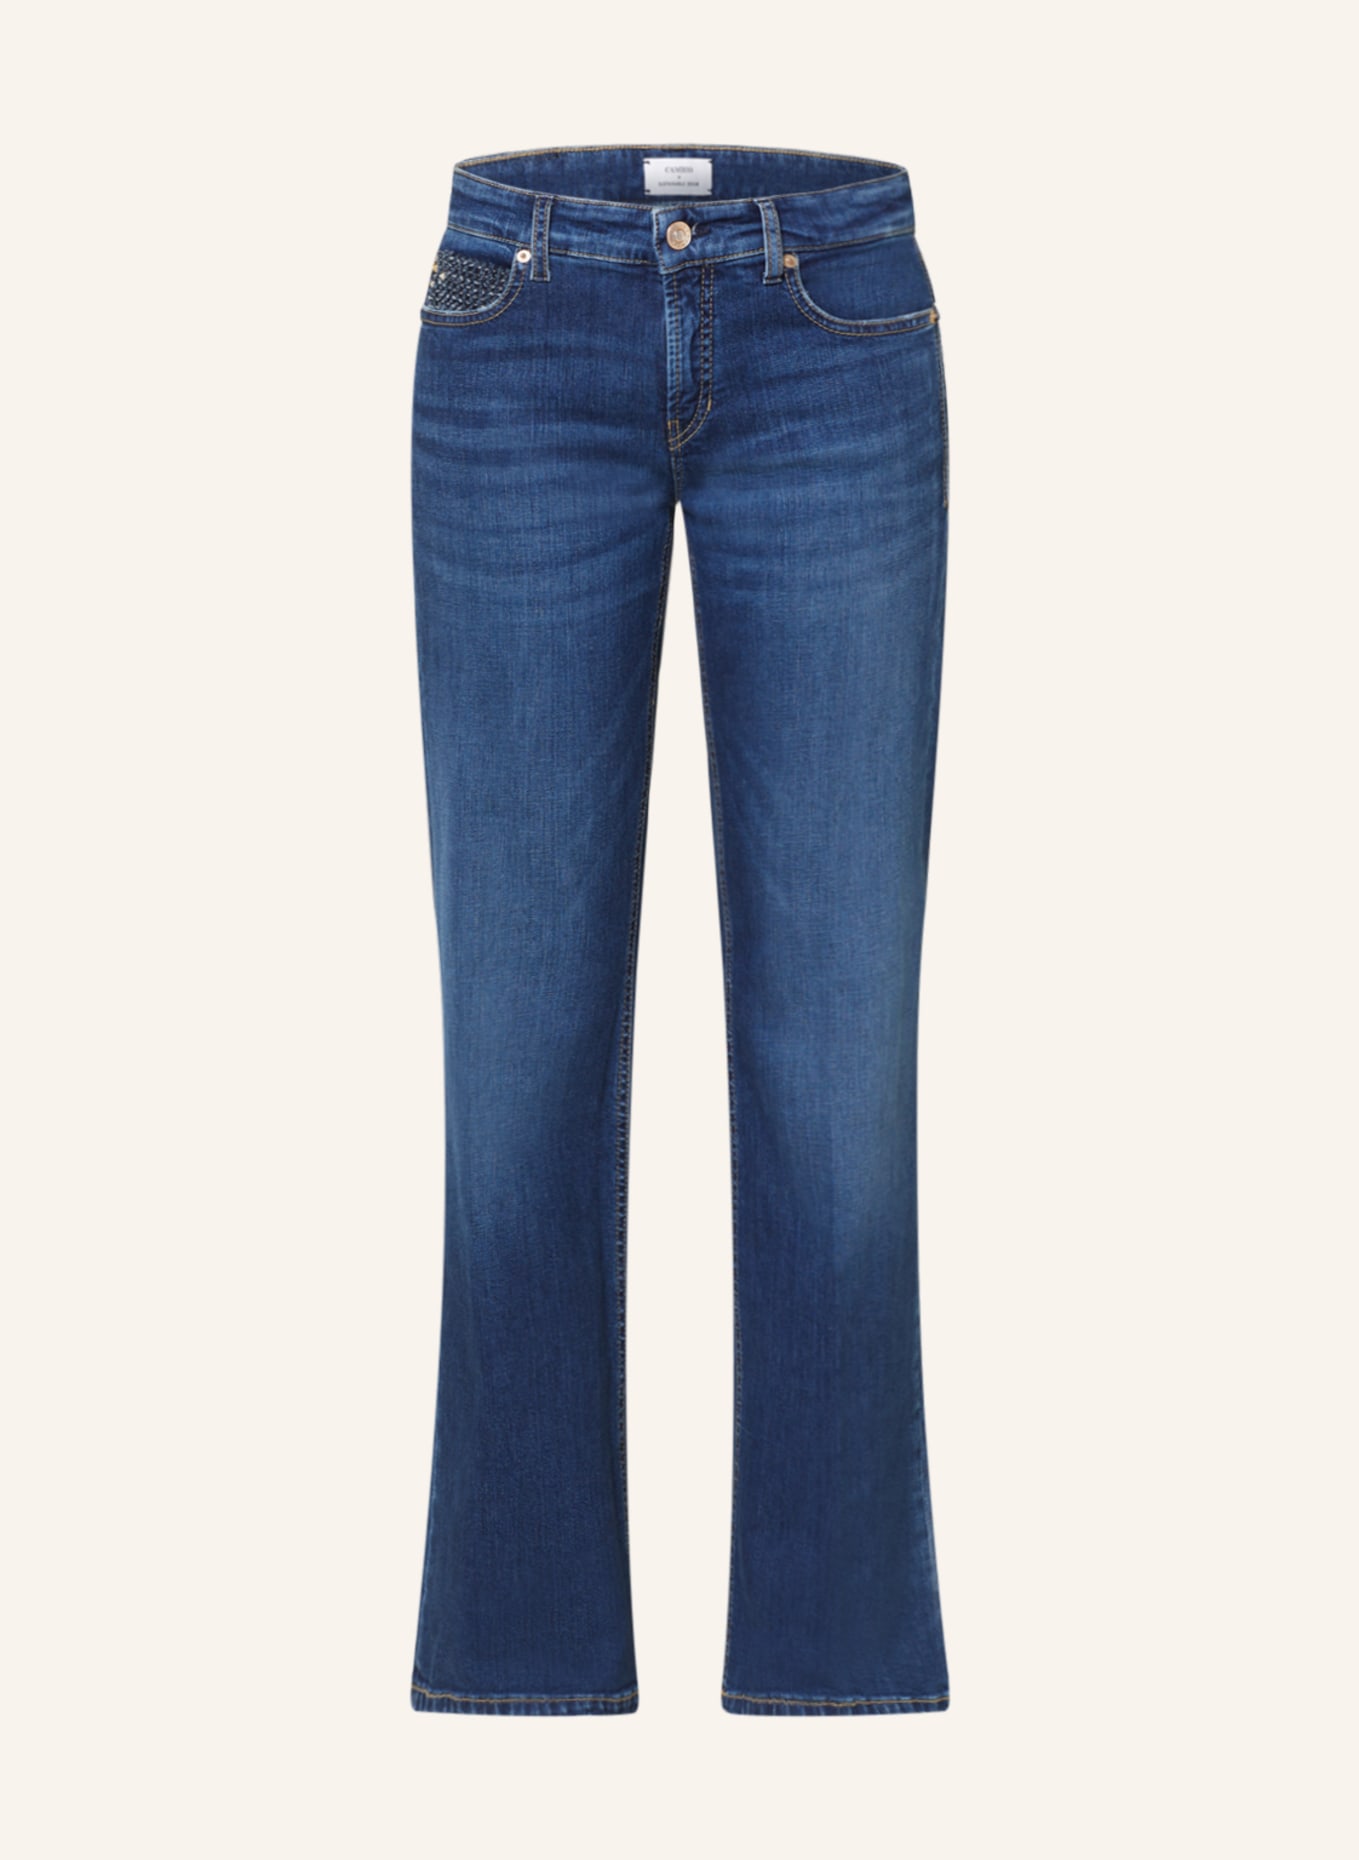 CAMBIO Jeans flared TESS, Kolor: 5187 eco used (Obrazek 1)